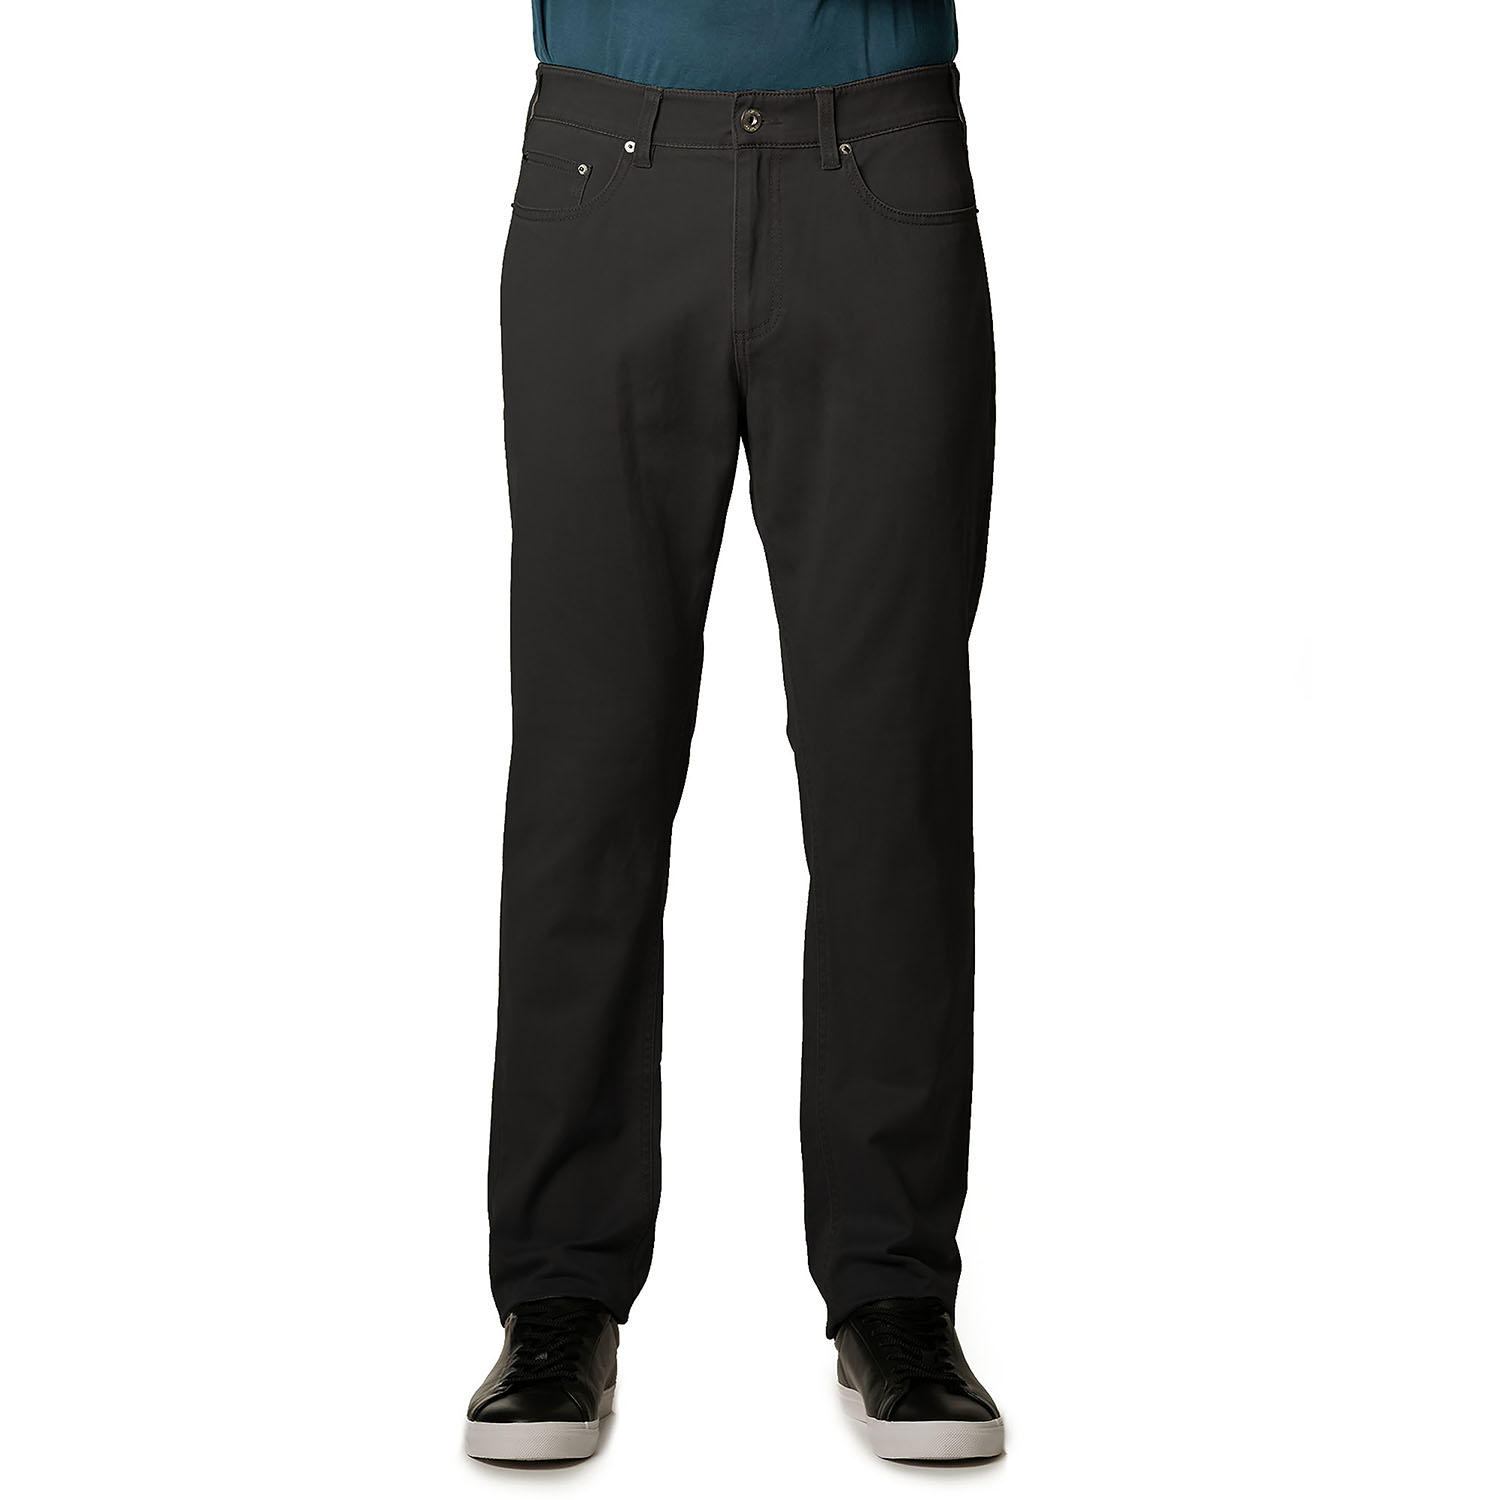 IRON Clothing PATRIOT Comfort Flex Waistband 5 Pocket Stretch Twill Pant - Black 34x34